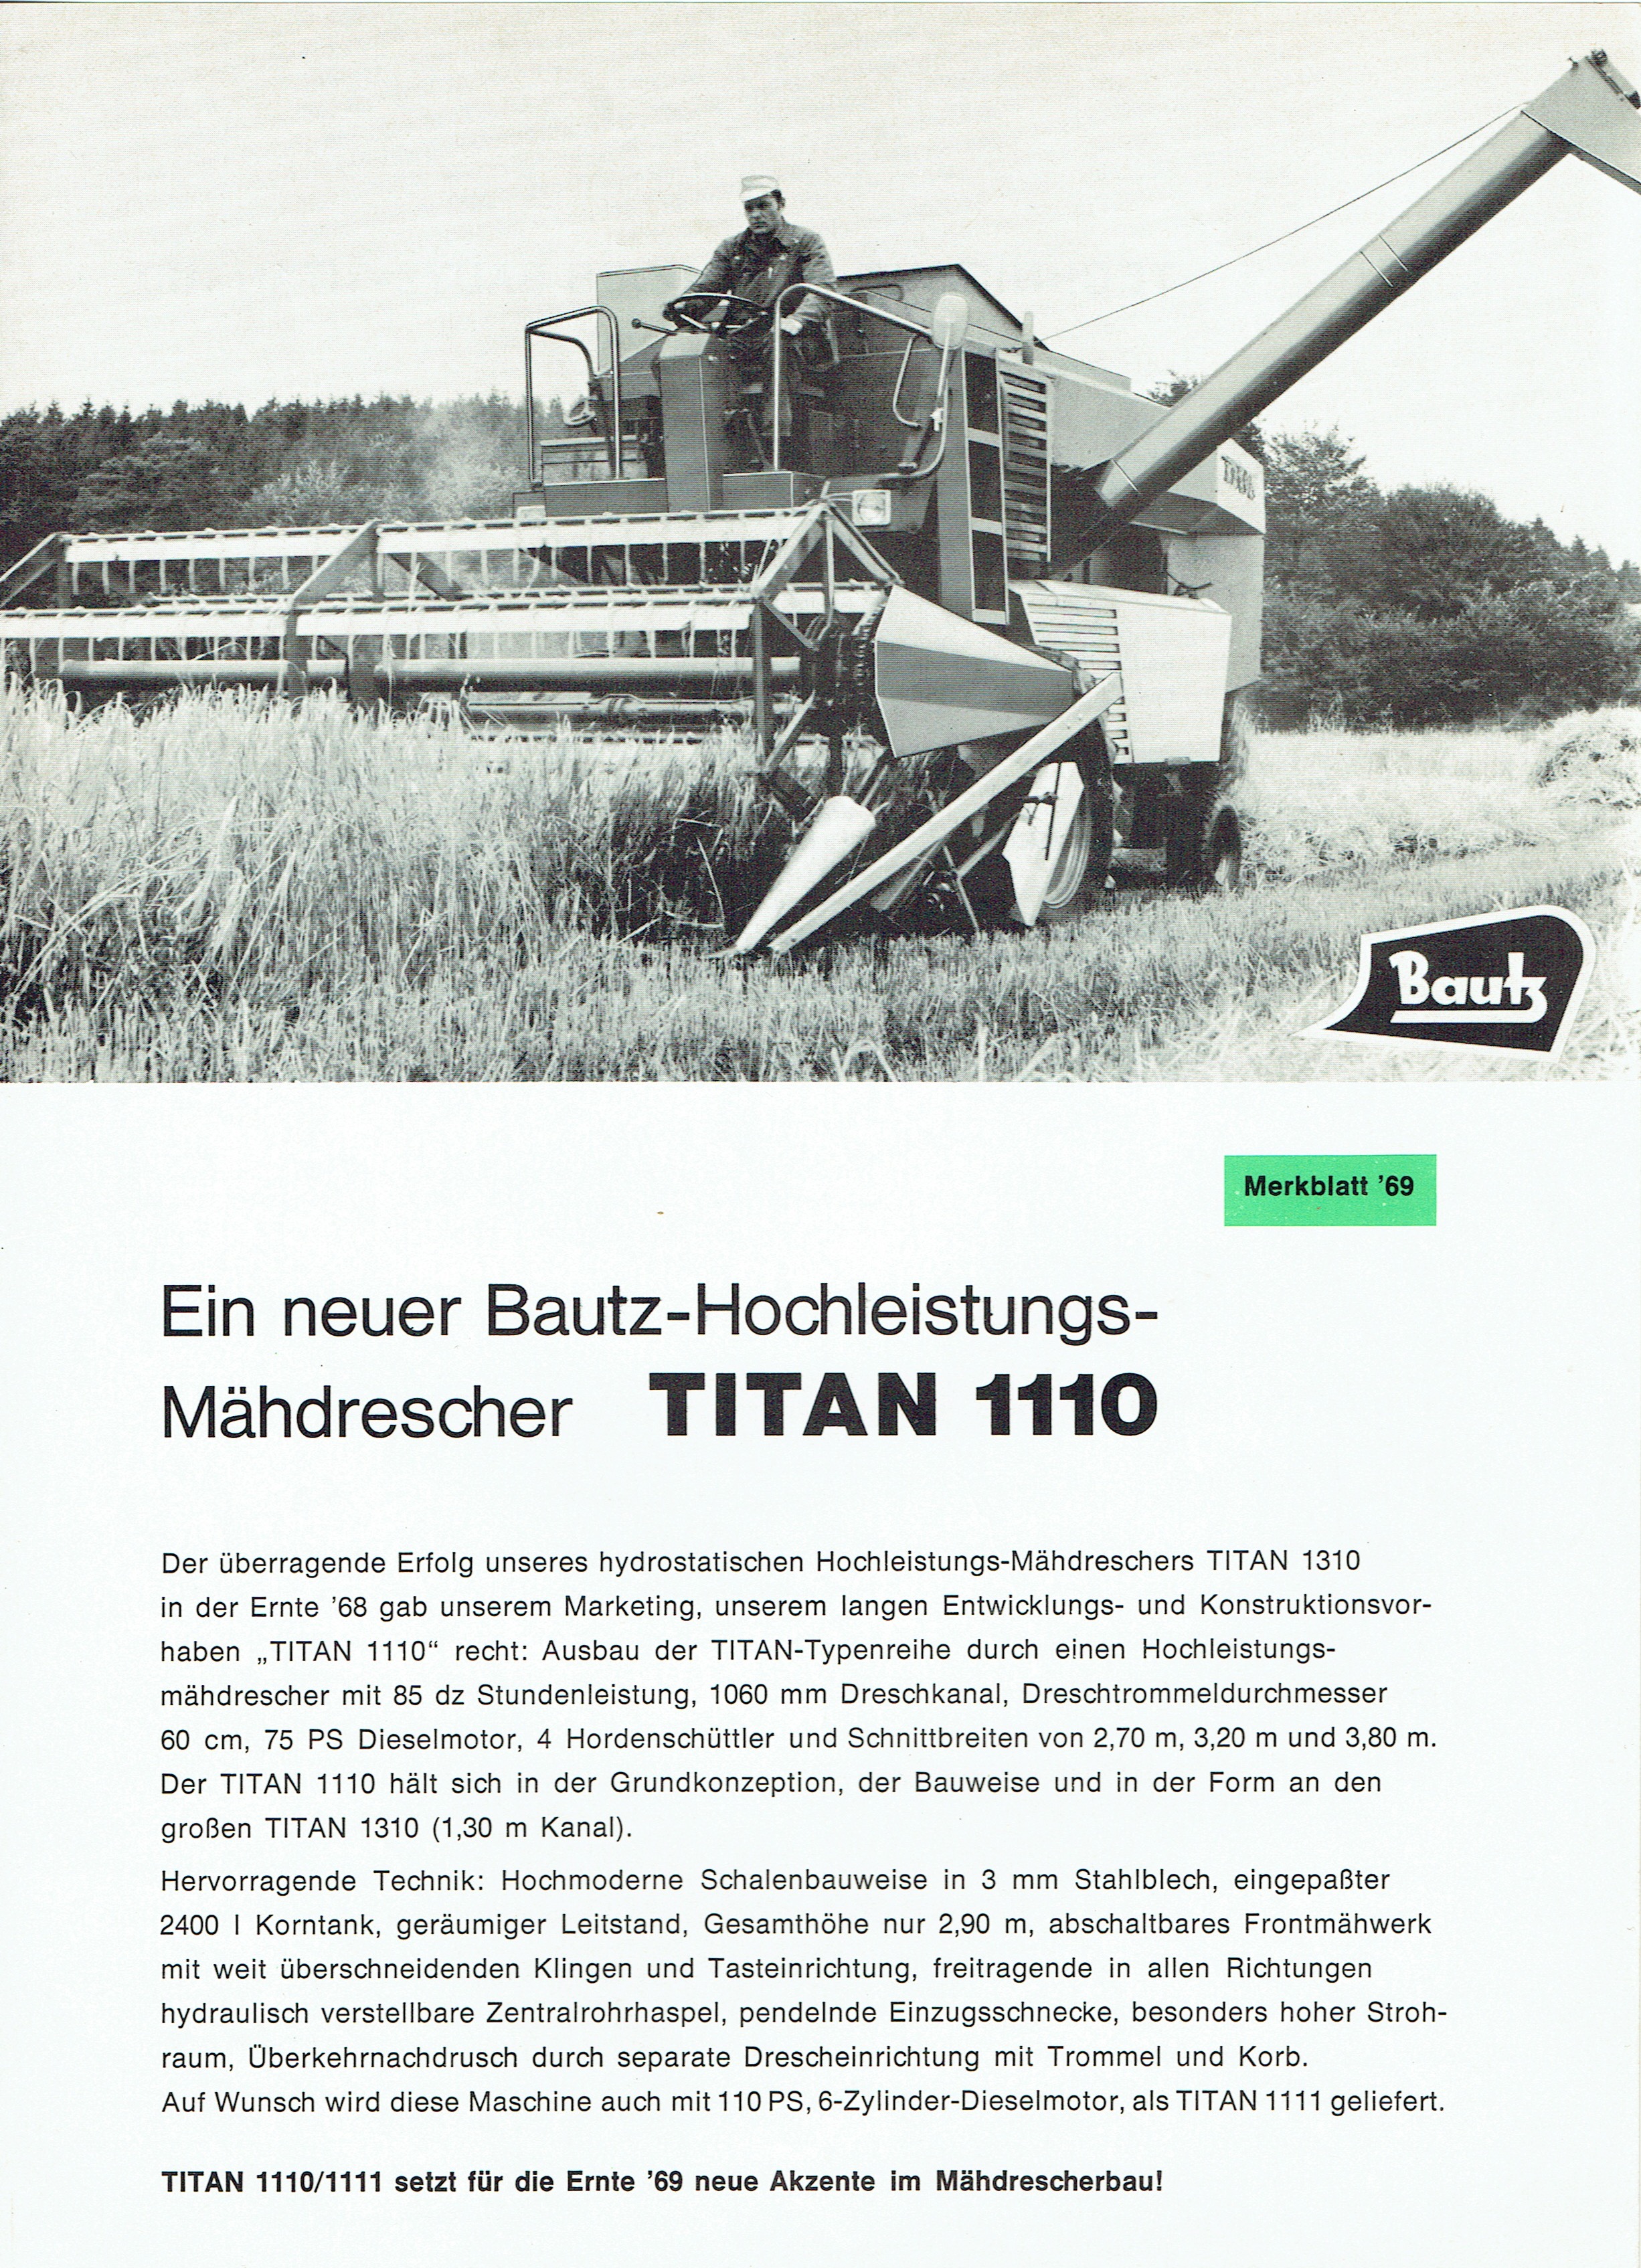 Bautz Titan1110/1111 (Mähdrescherarchiv Kühnstetter CC BY-NC-SA)